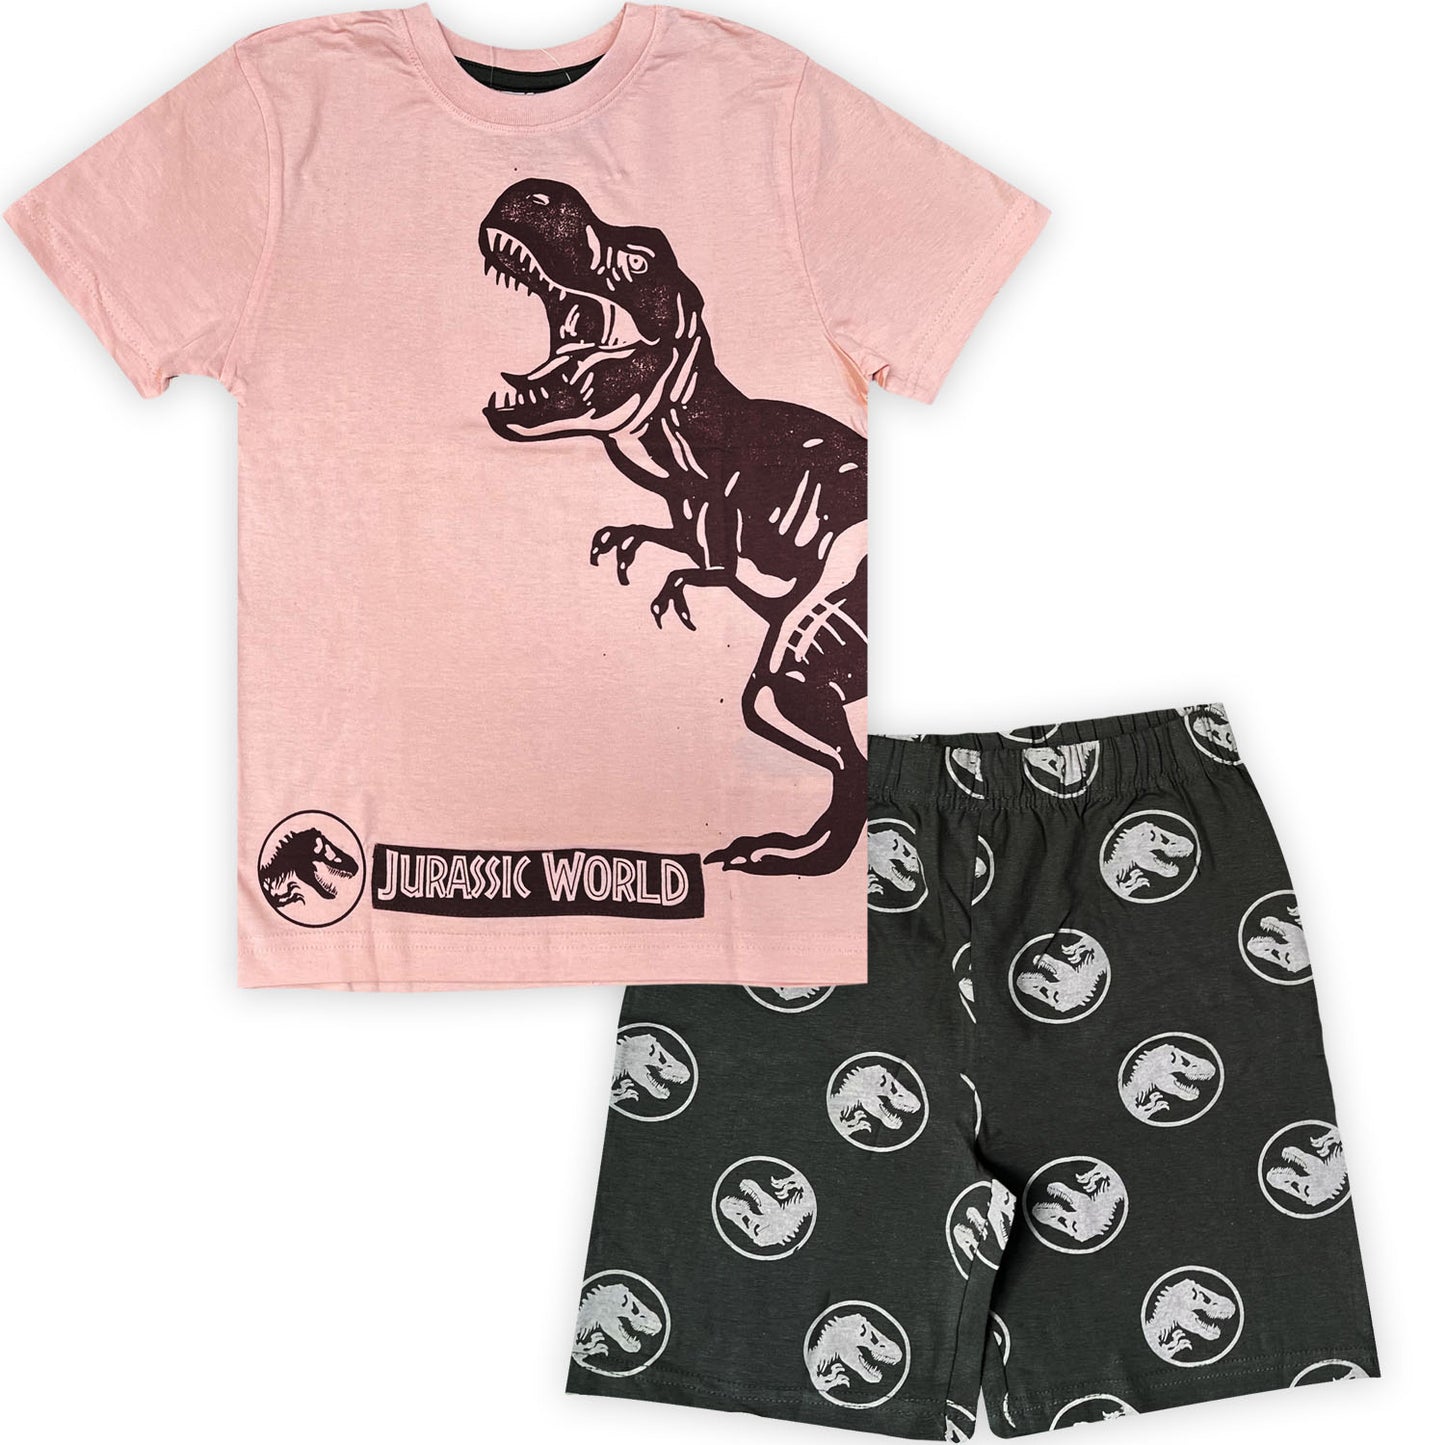 Jurassic World Cotton Pyjama Set for Kids